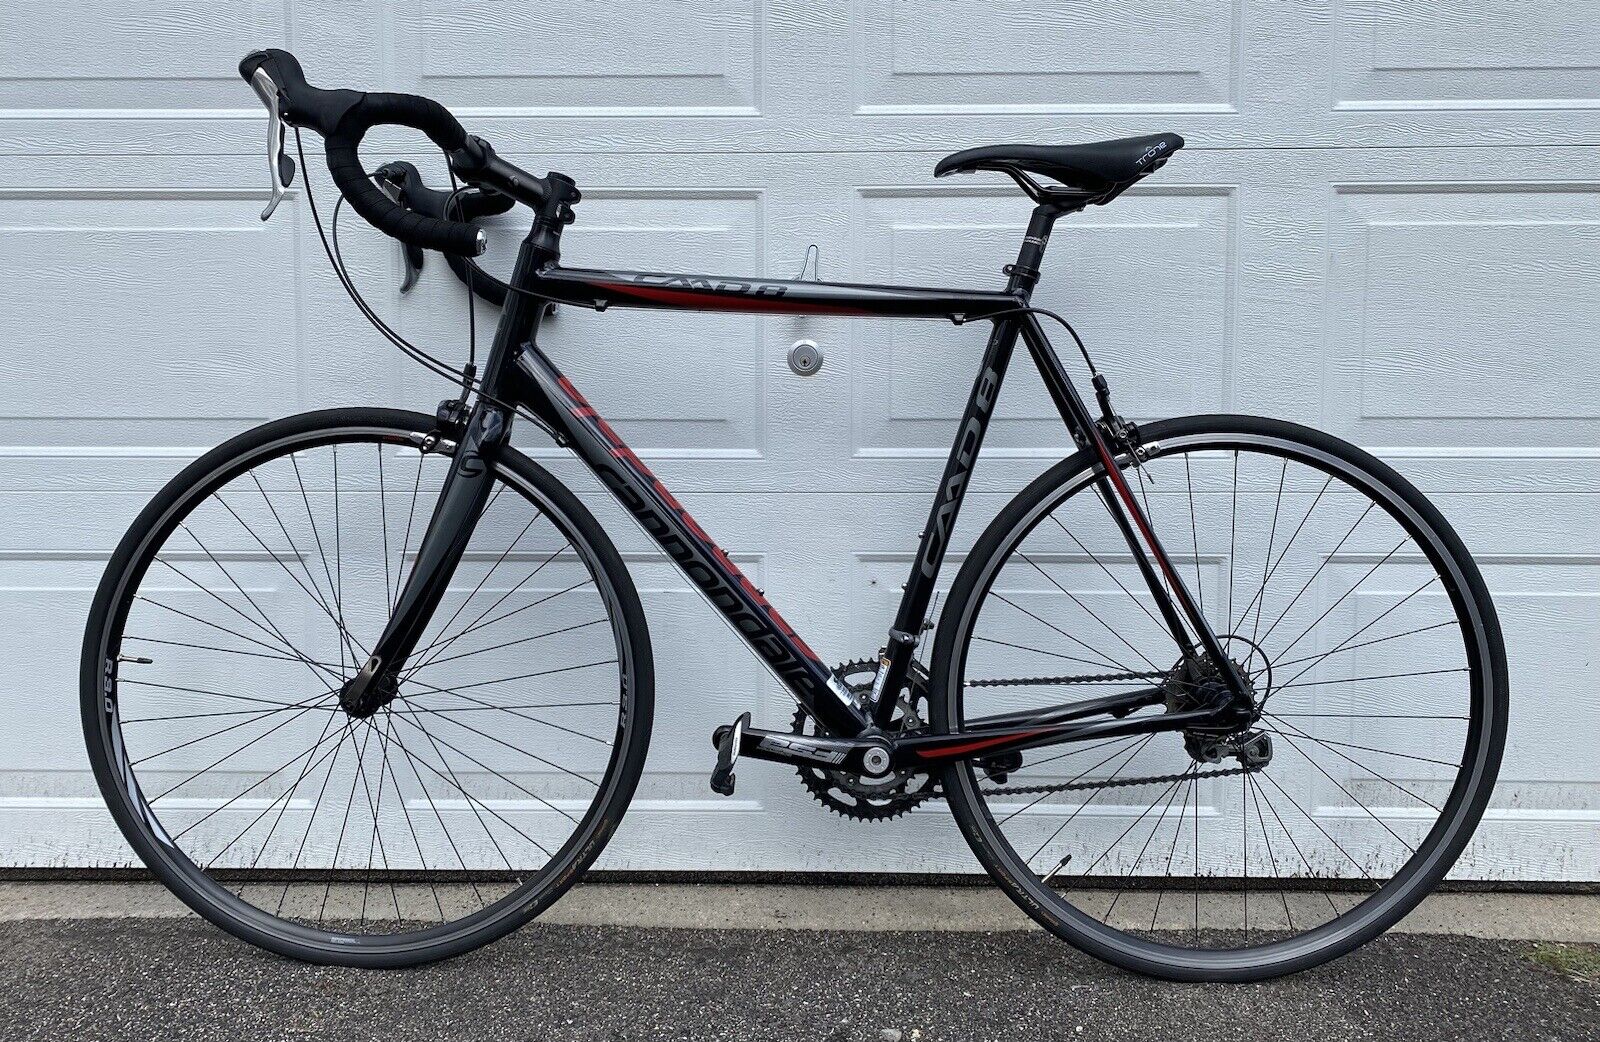 Cannondale Road Bike - CAAD 8 (Size 58cm) Tiagra